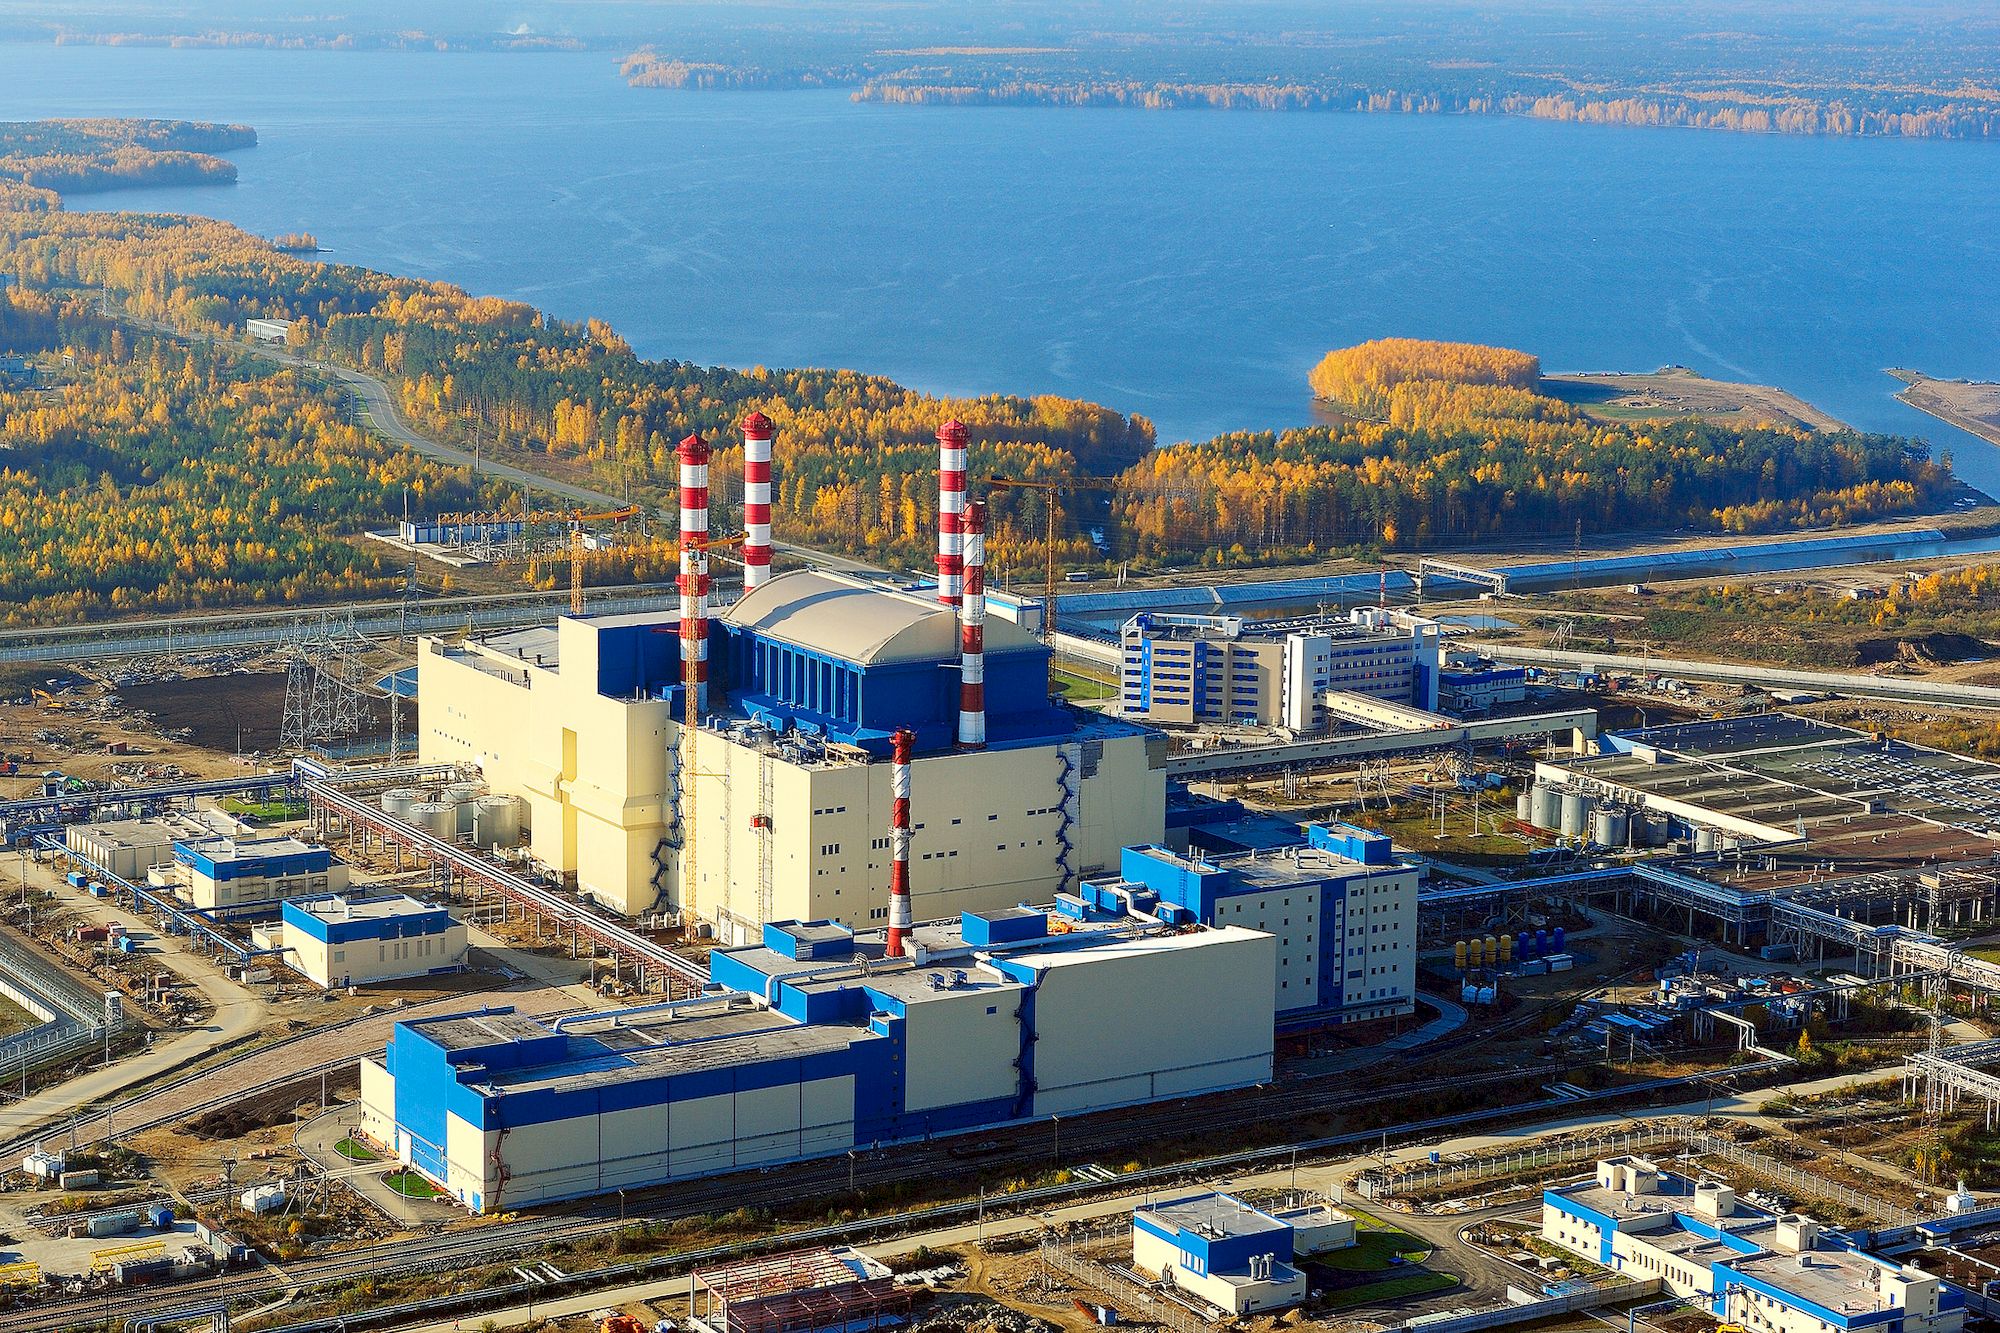 La centrale nucléaire de Beloïarsk // Source : IAEA Imagebank, via Flickr.